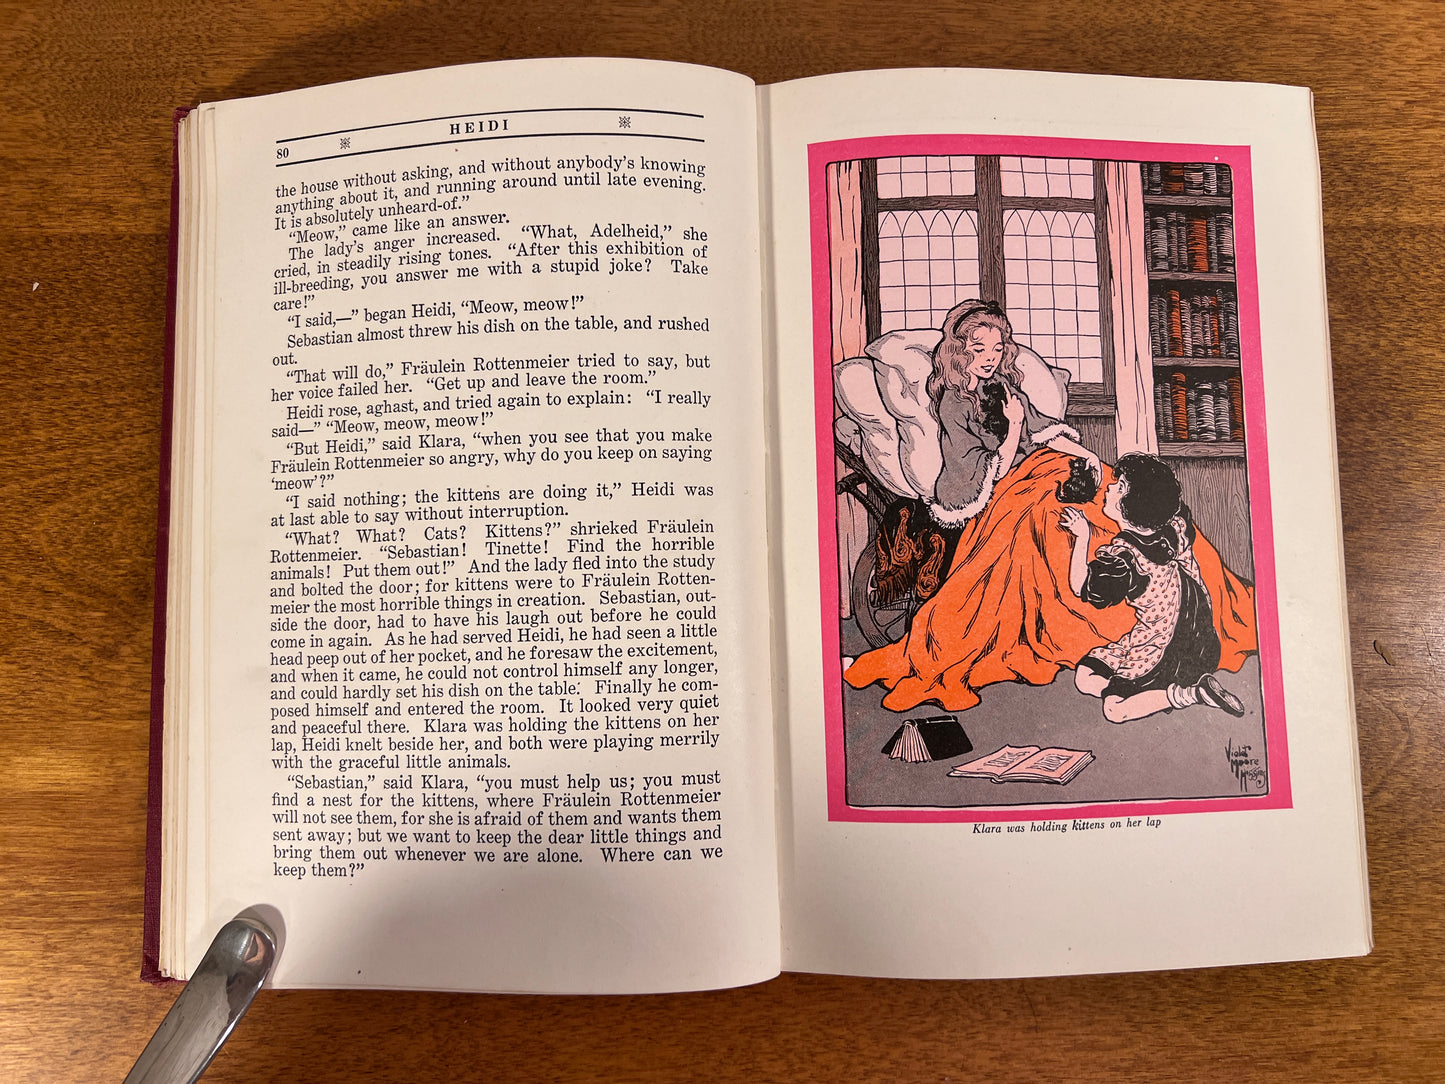 Heidi by Johanna Spyri, Illustrated by Violet, Moore & Higgins 1936